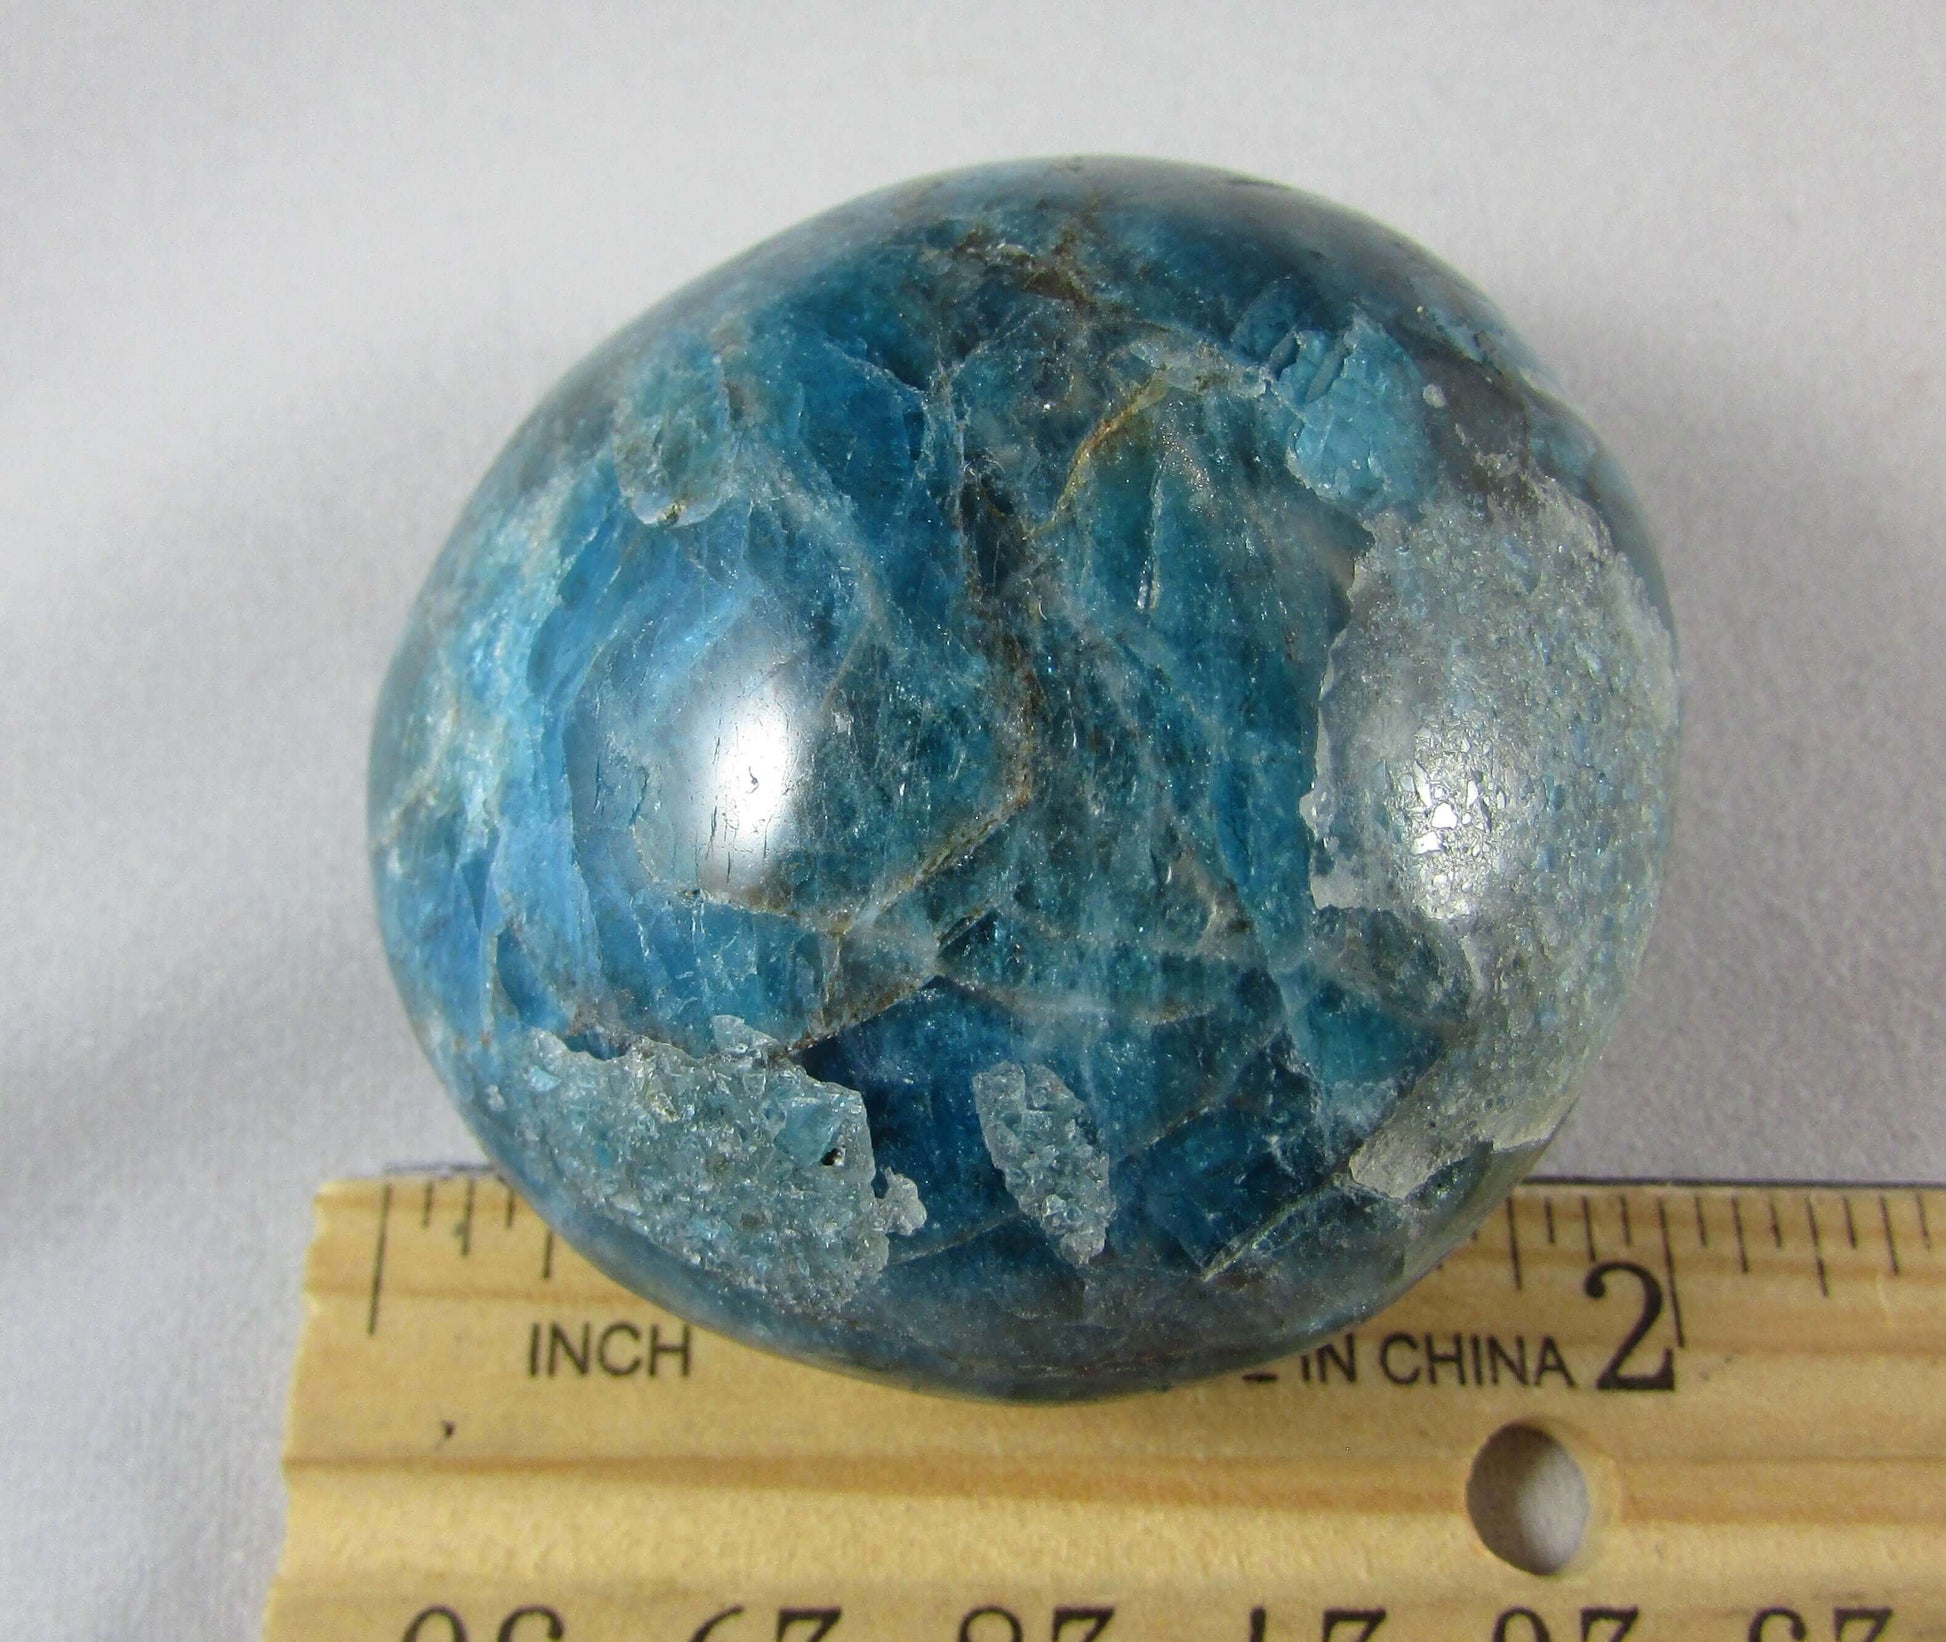 blue apatite crystal palmstone, pocket stone, worry stone